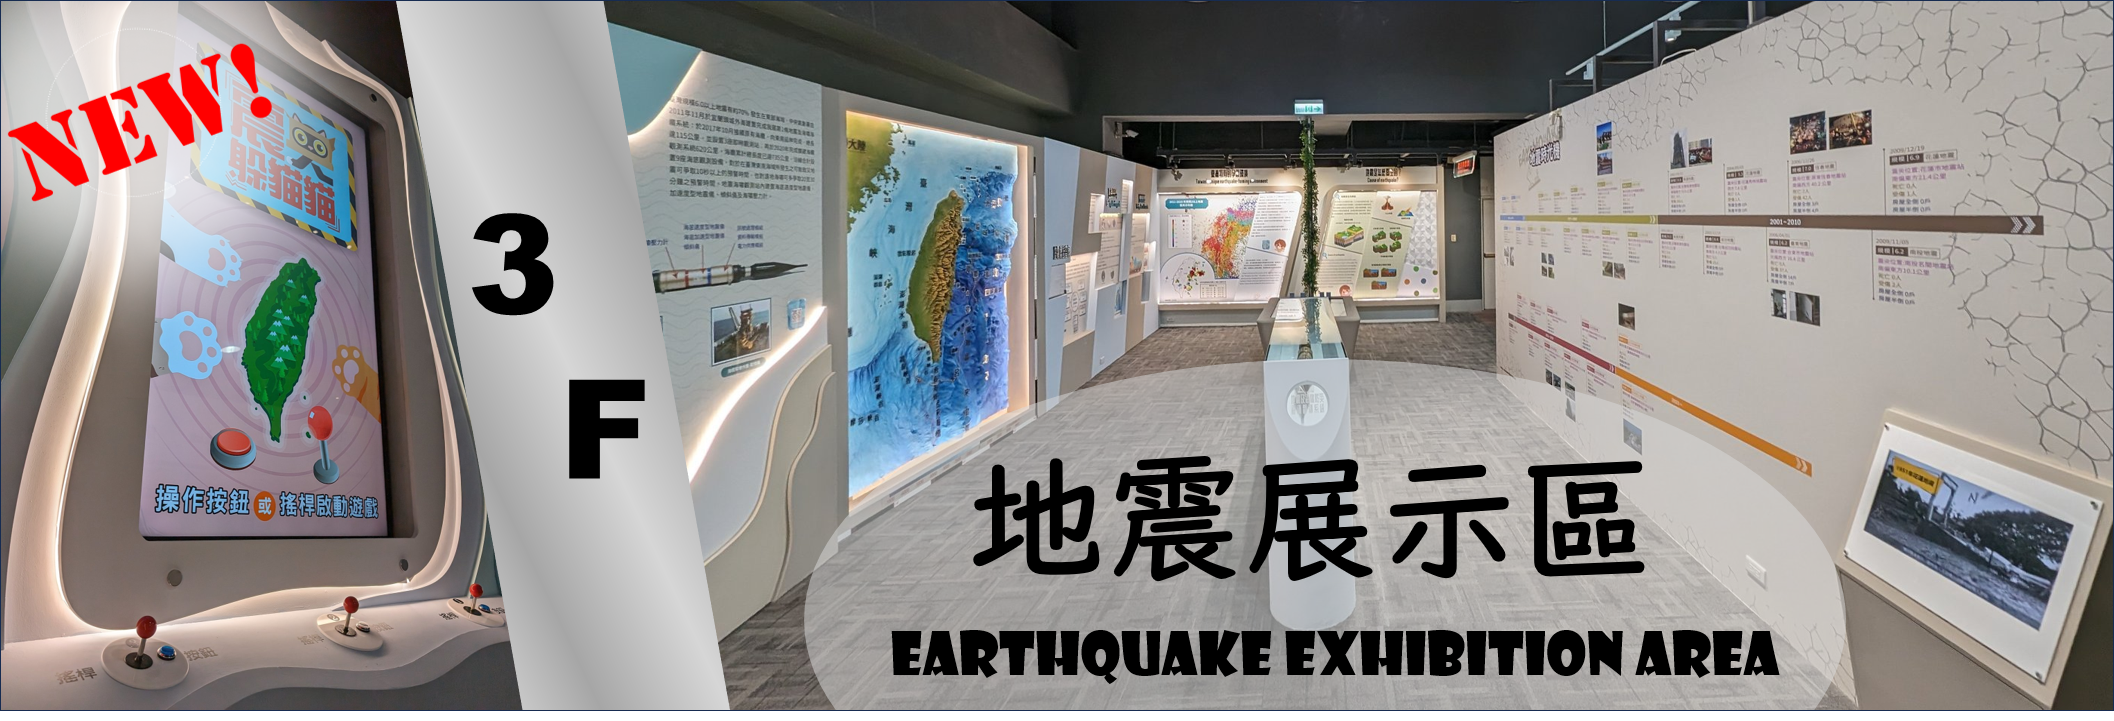 Earthquake exhibition area new open